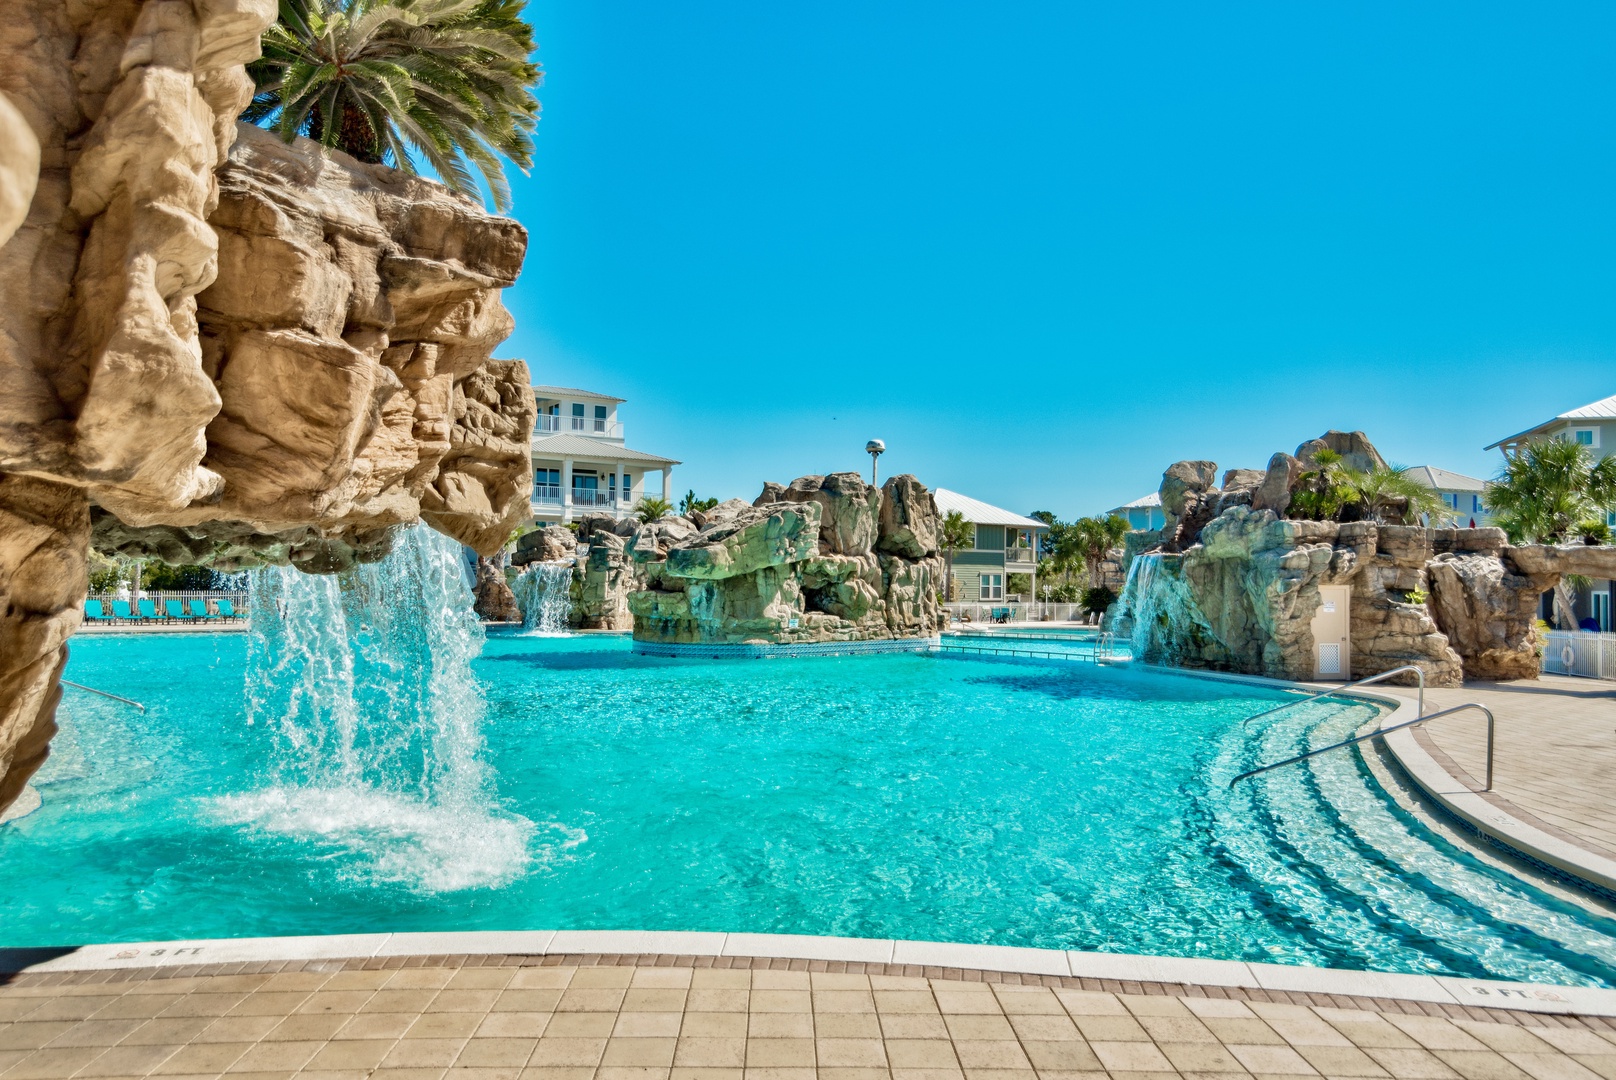 The amazing neighborhood pool with multiple waterfalls and grottos!